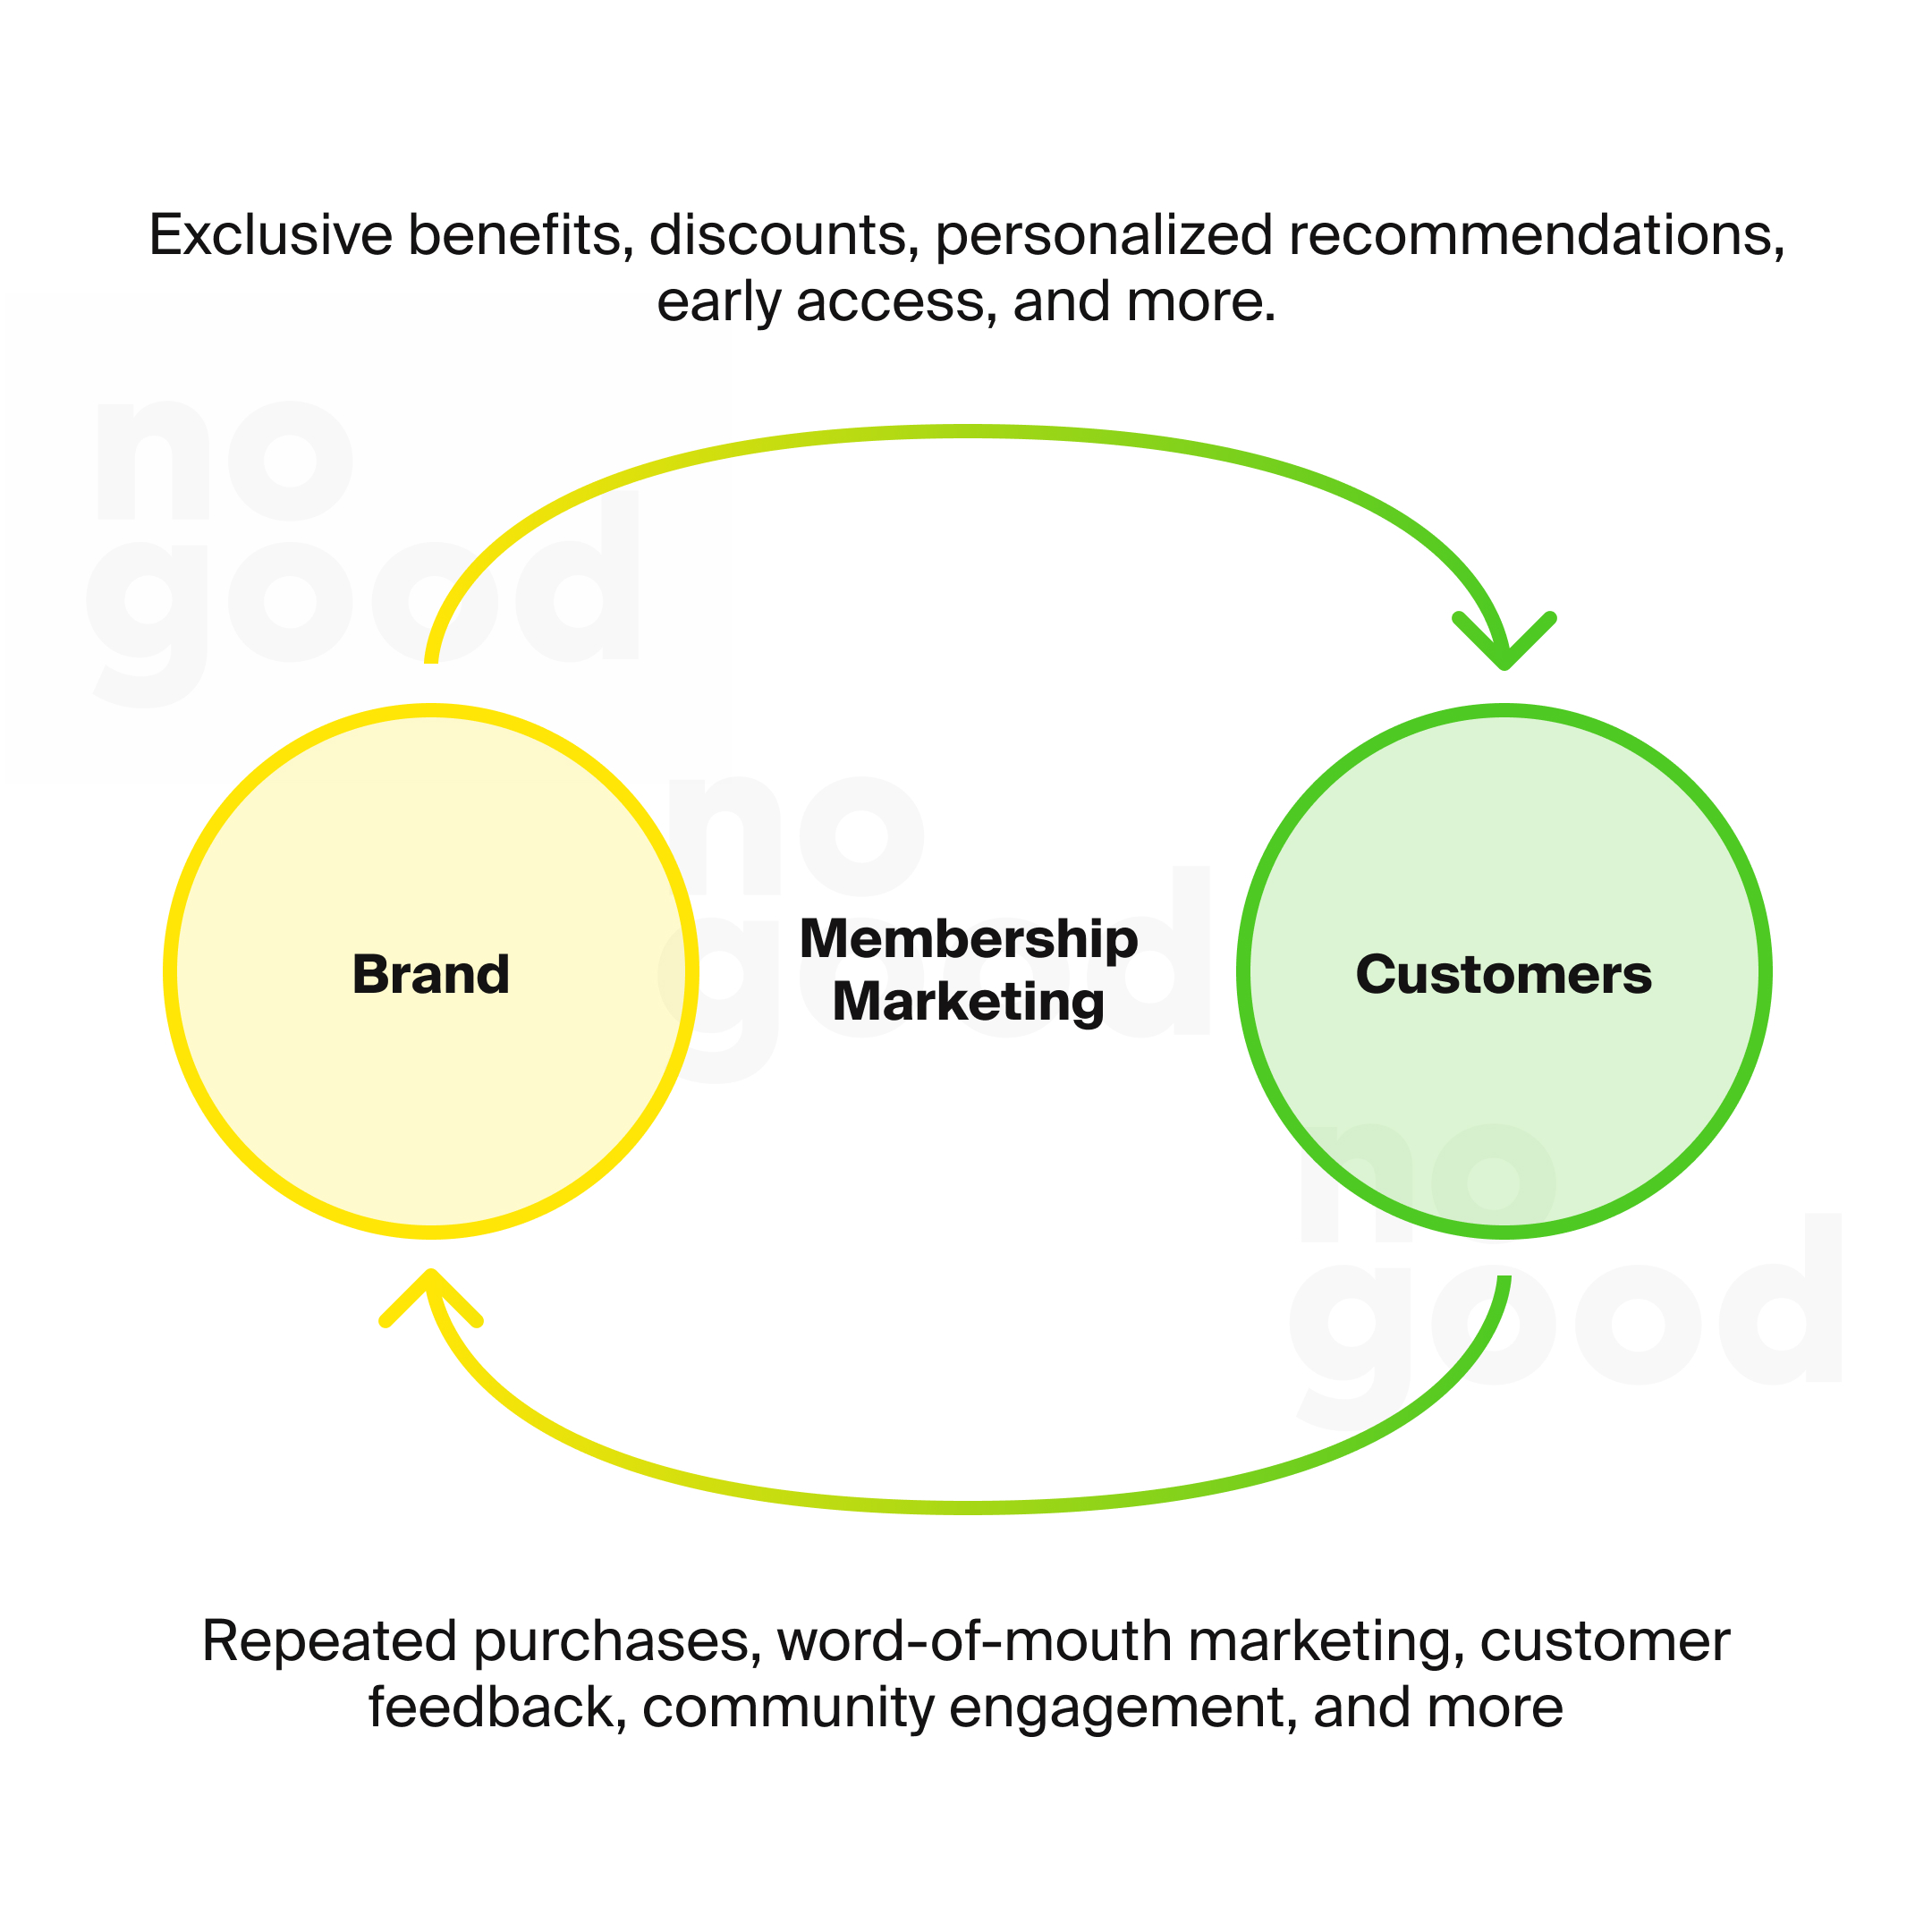 The membership marketing cycle